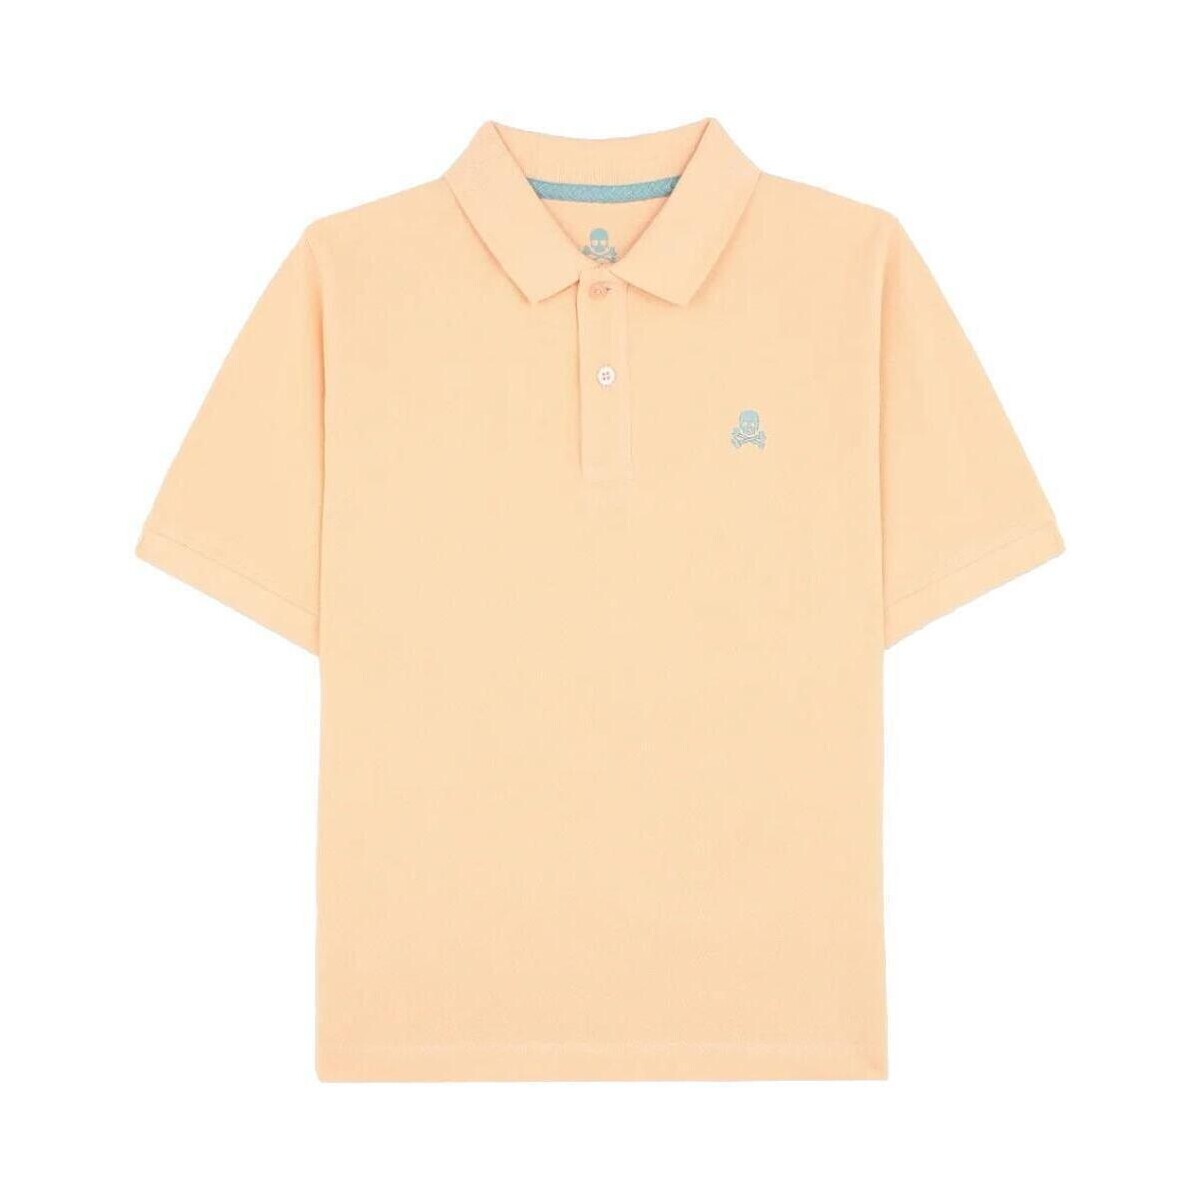 Textiel Jongens T-shirts korte mouwen Scalpers  Orange